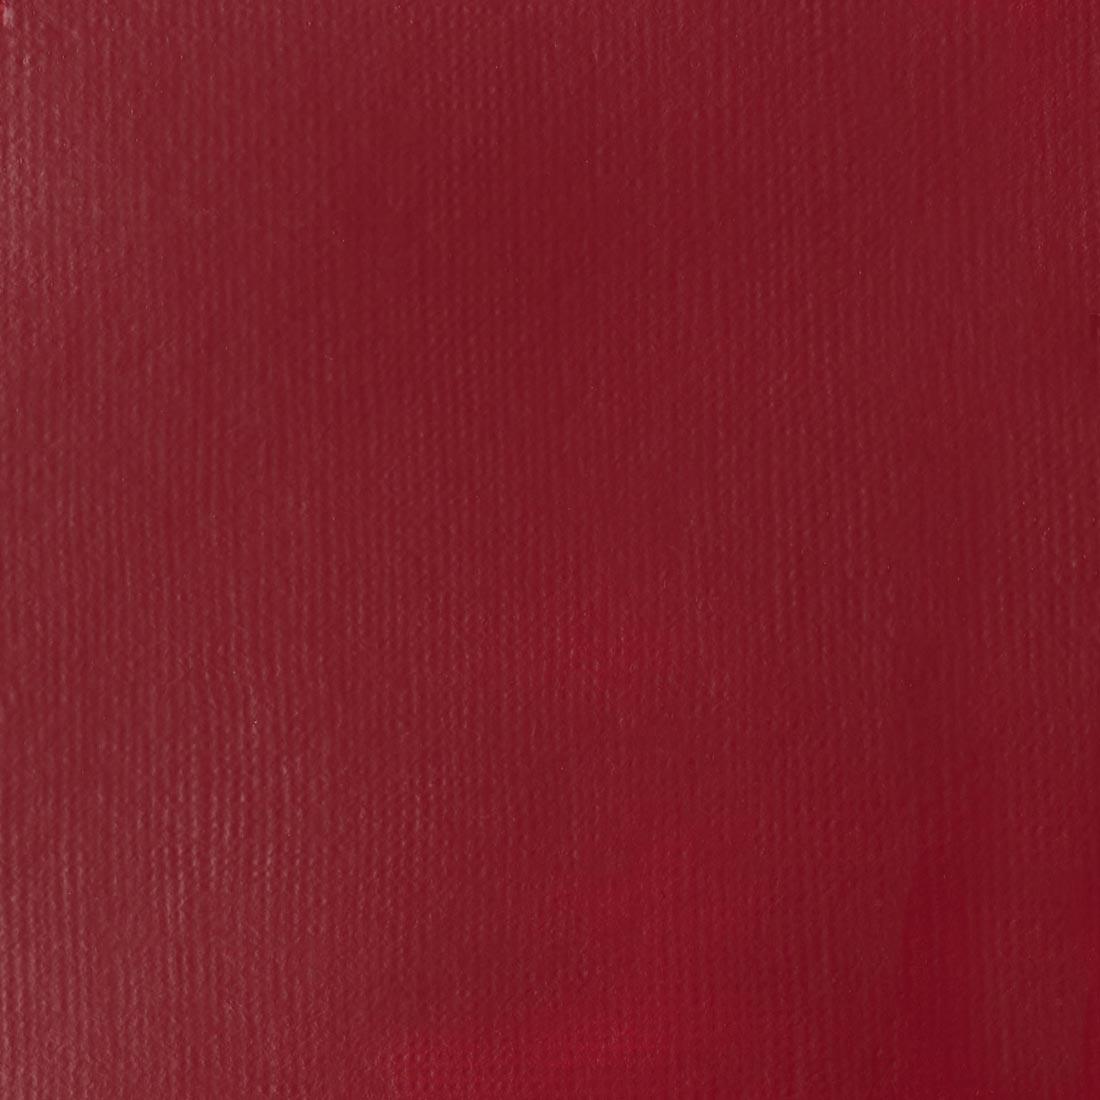 Quinacridone Crimson Liquitex Professional Heavy Body Acrylic Paint Swatch